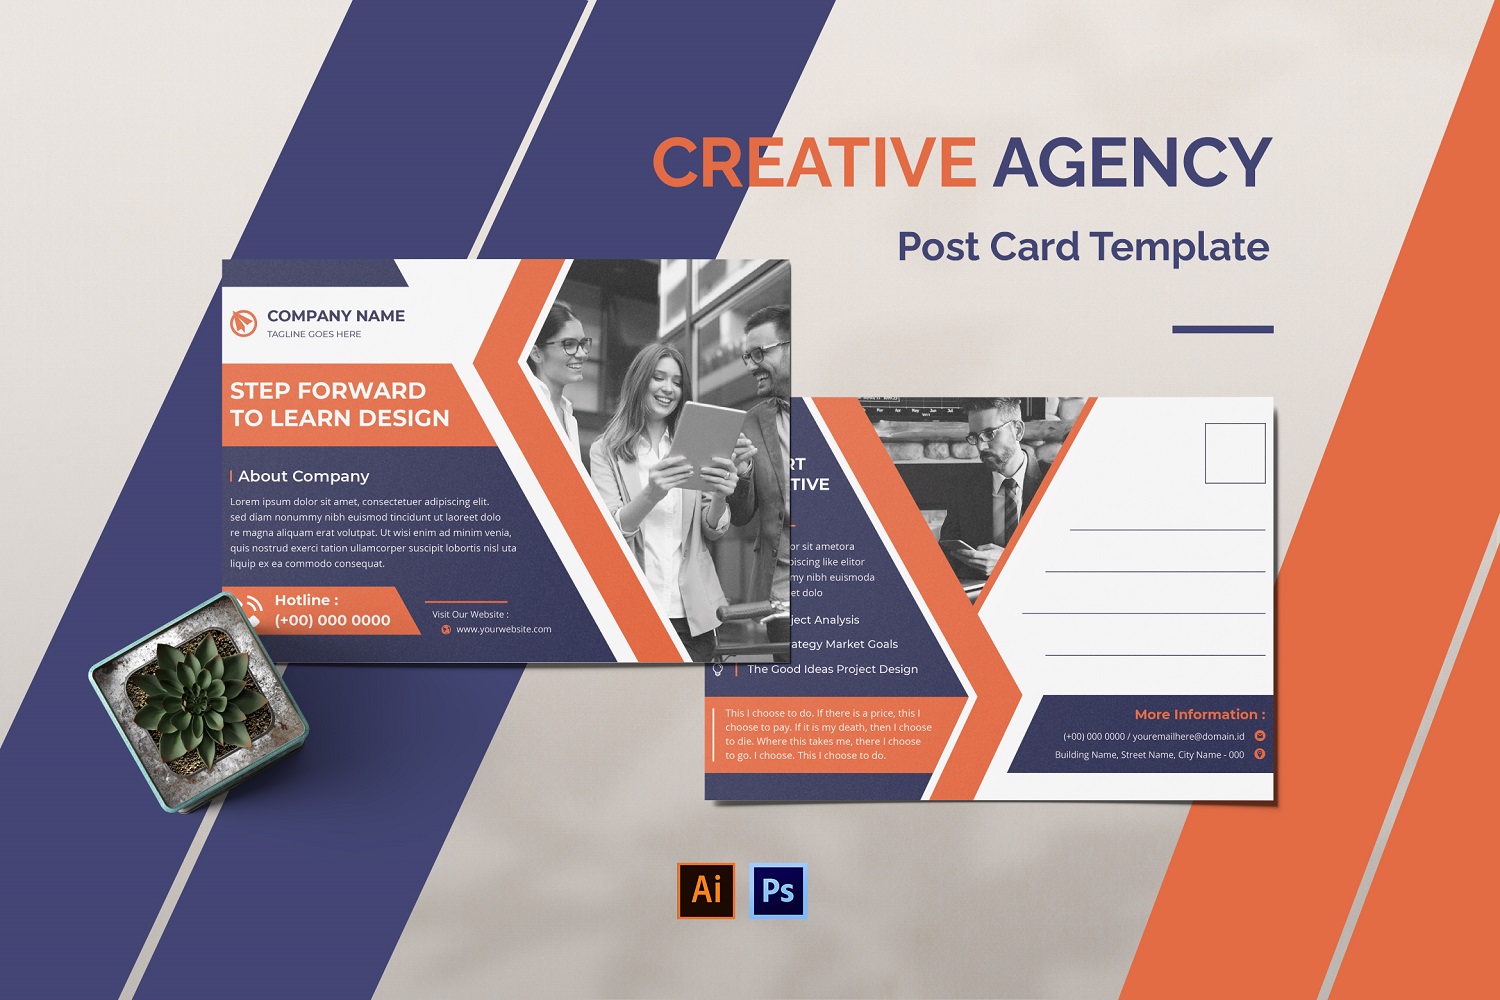 Creative Agency Post Card Template